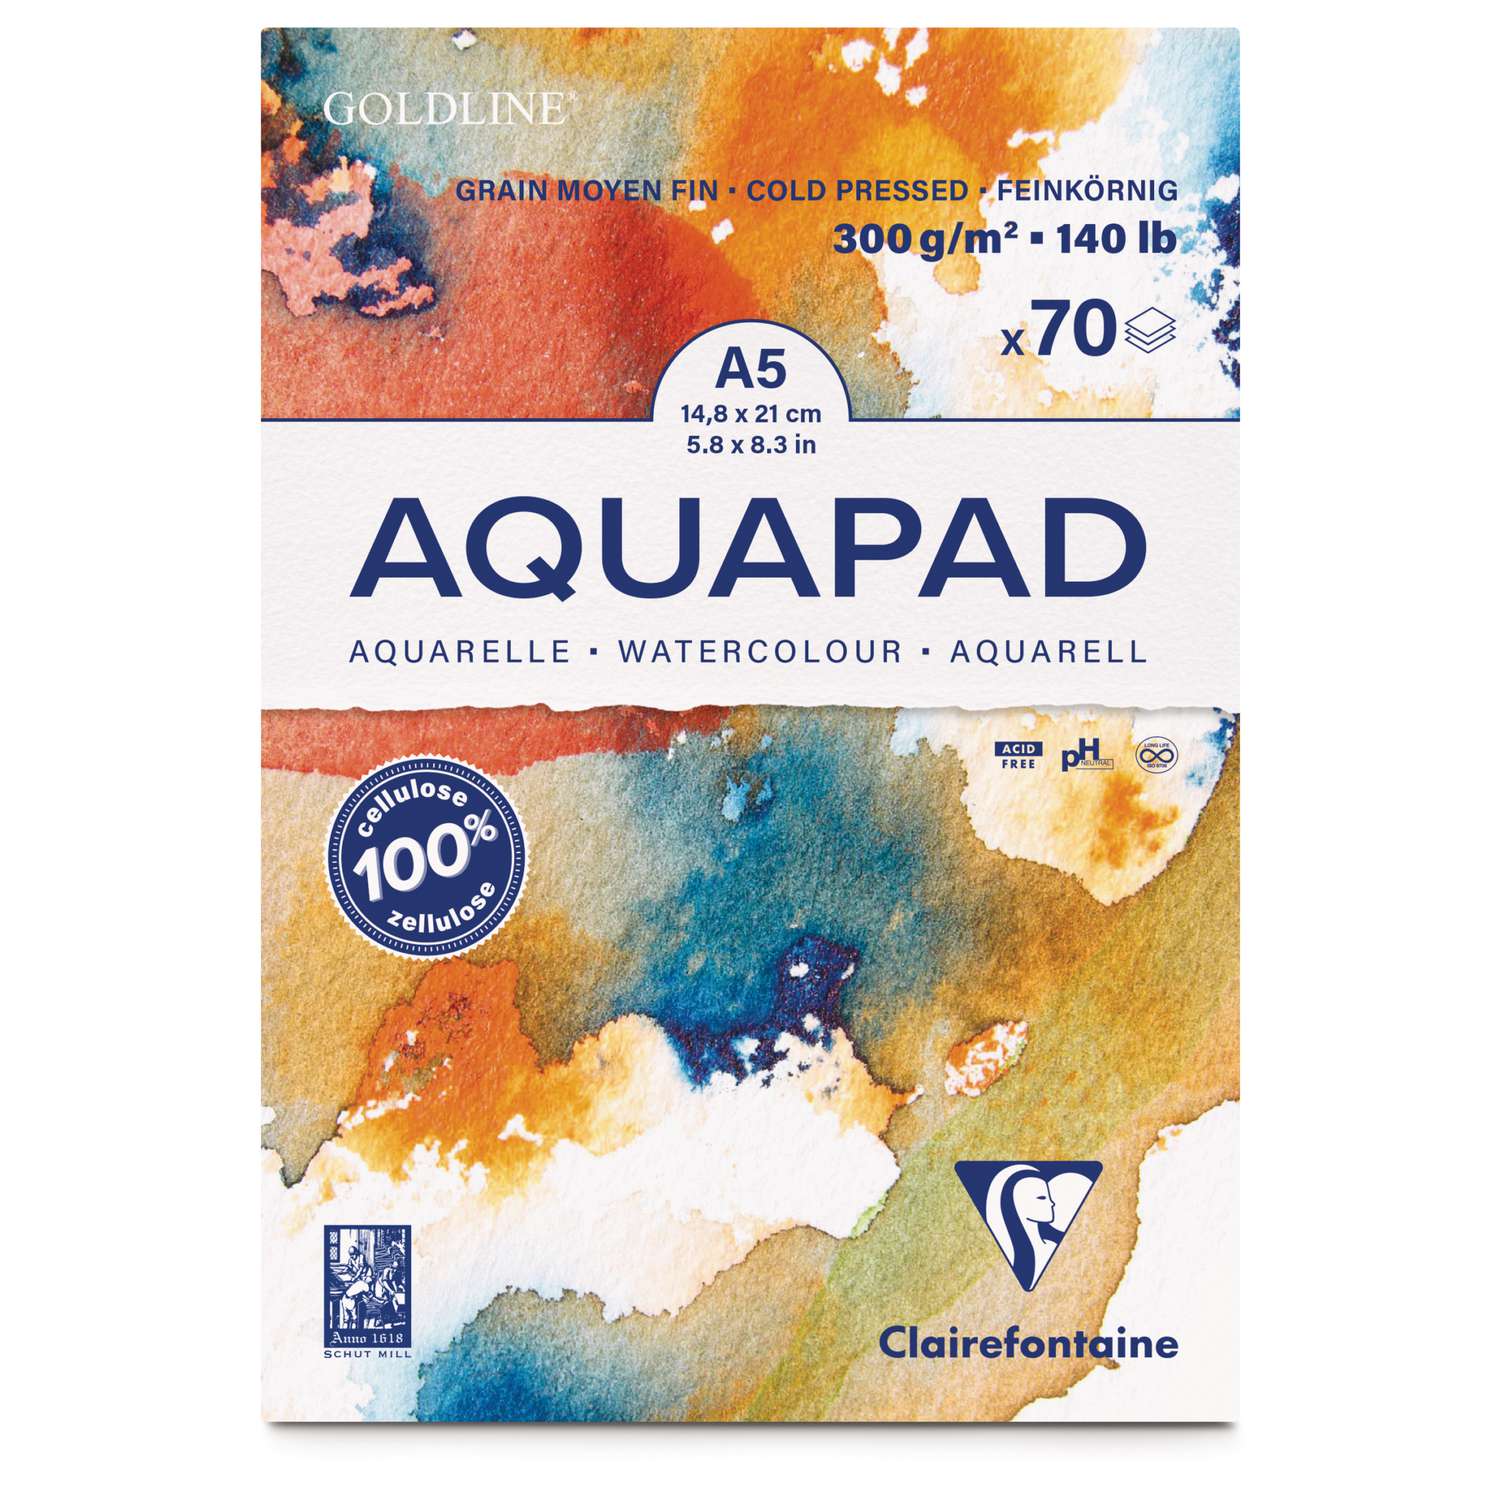 Clairefontaine Goldline Aquapad for Watercolours